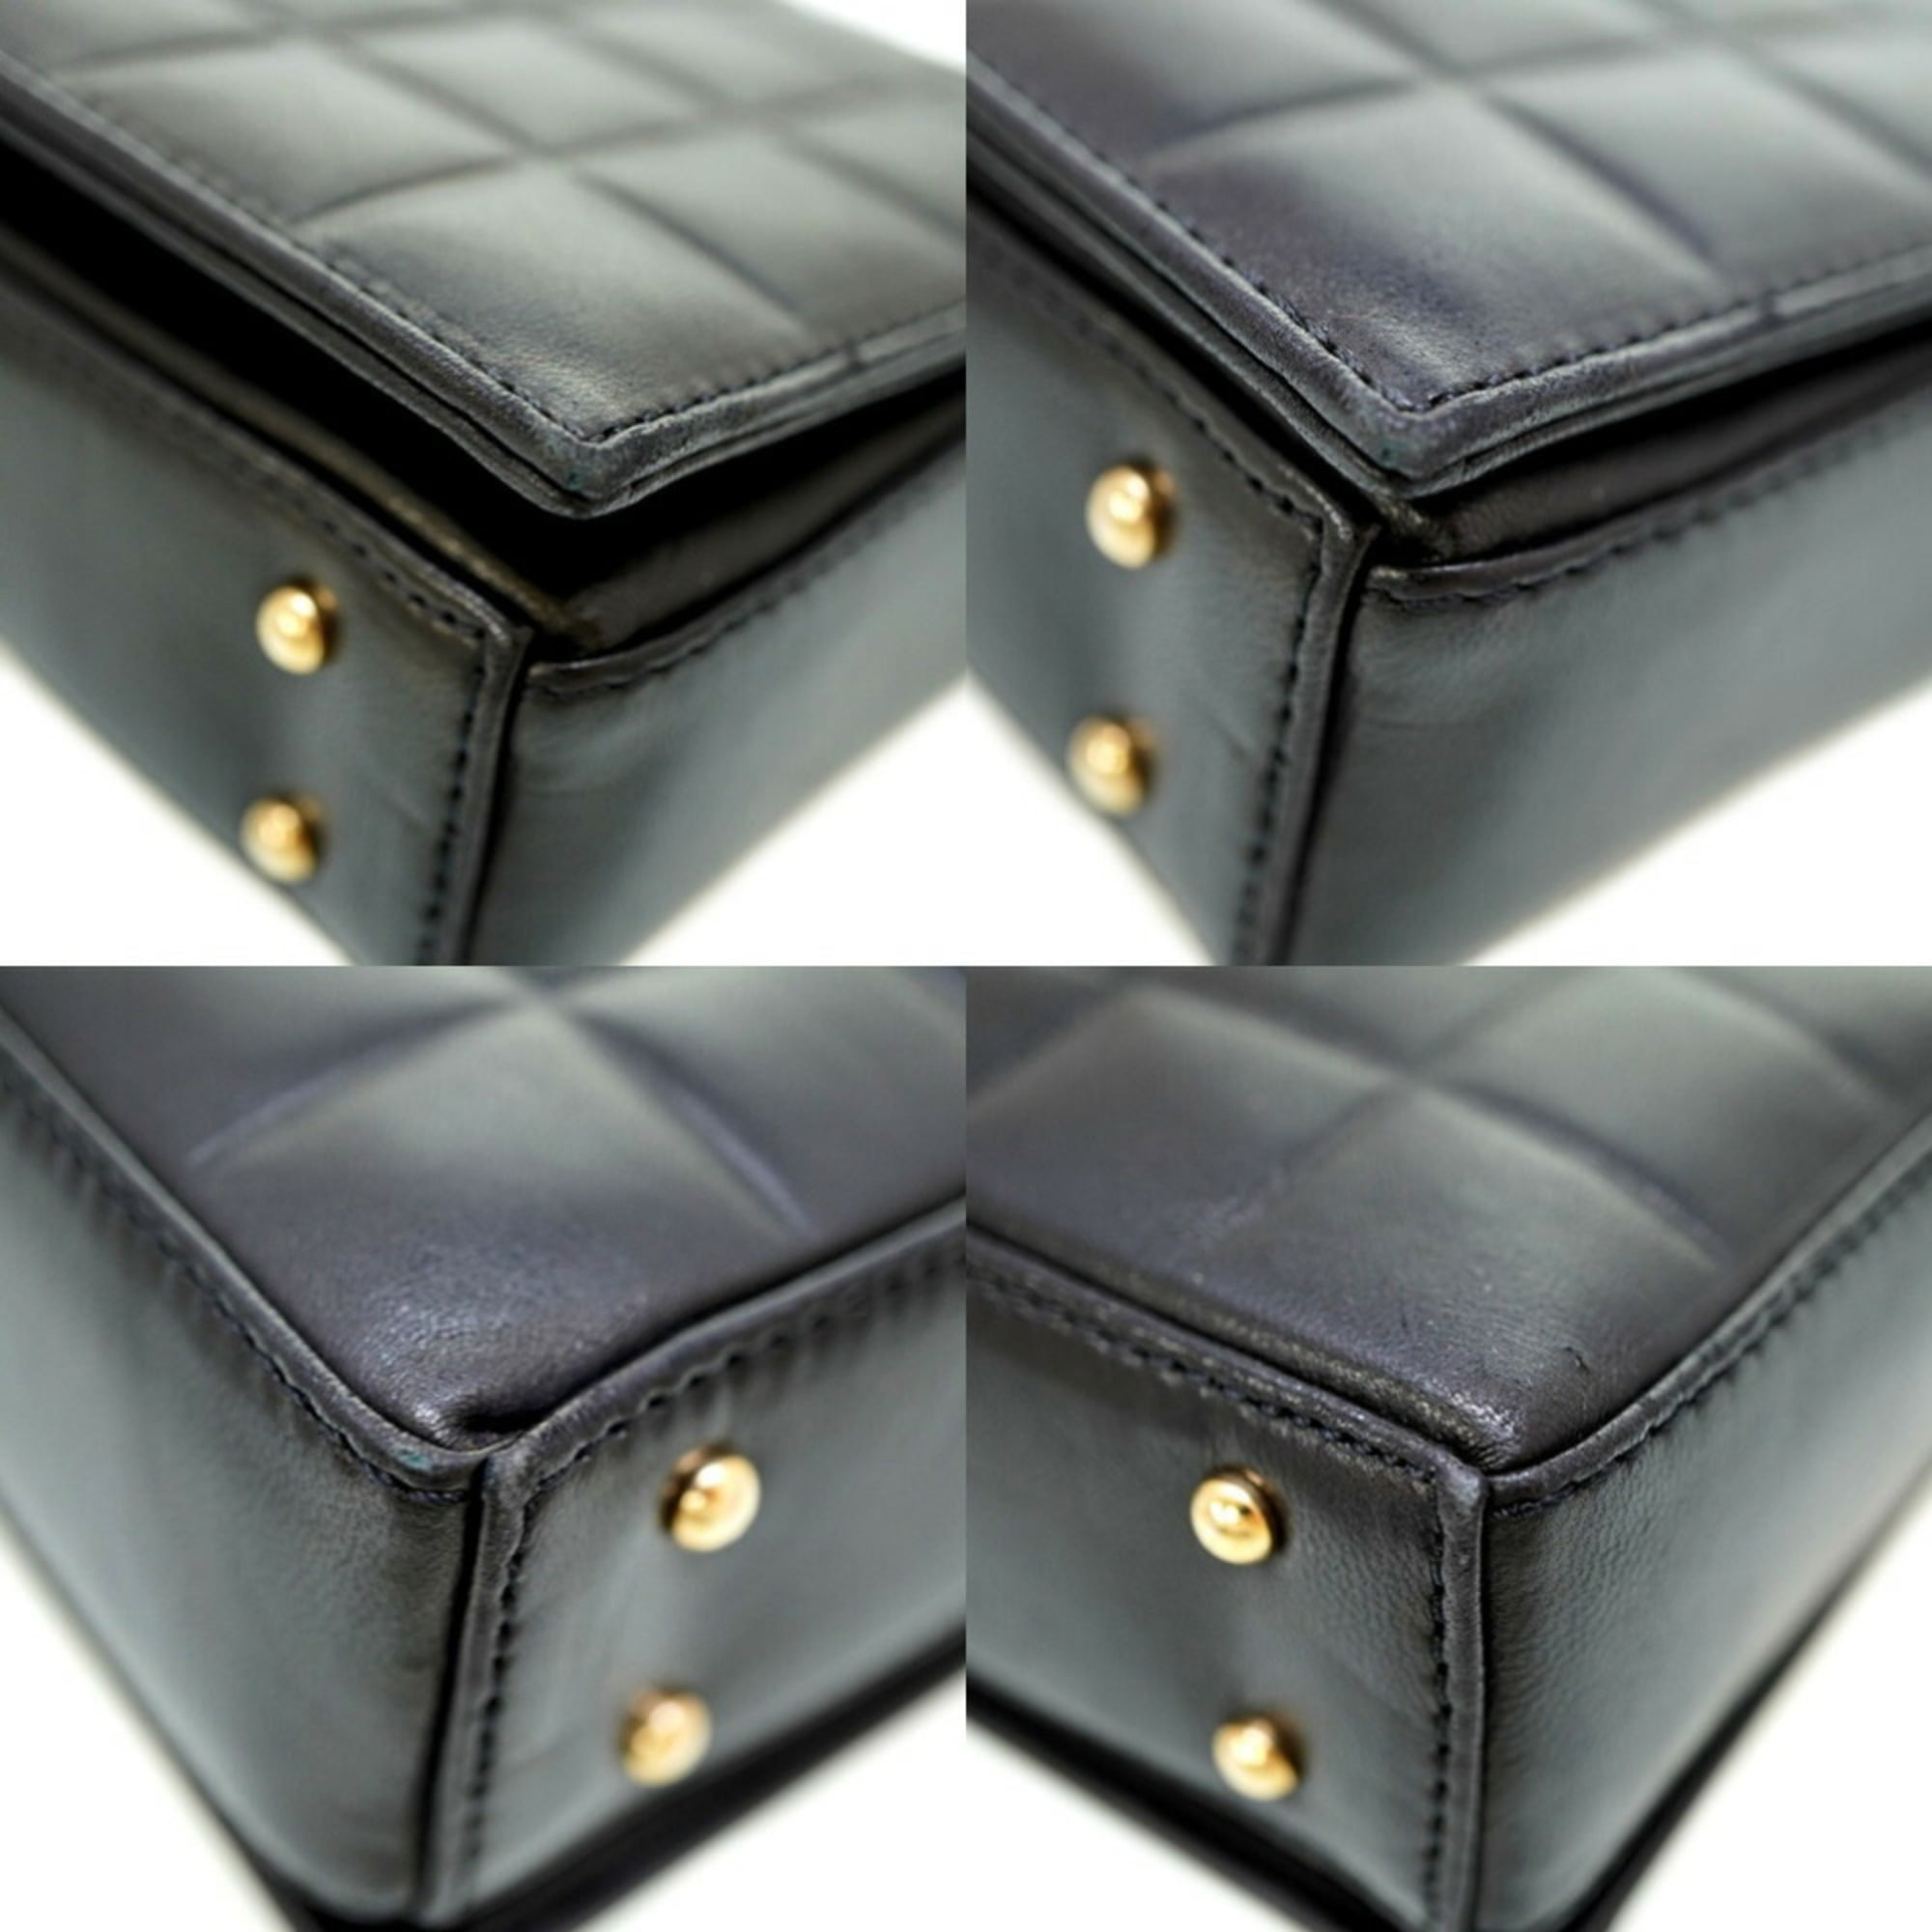 Pre-Owned Chanel chocolate bar shoulder bag A17370 Shiramskin leather black  (Fair)